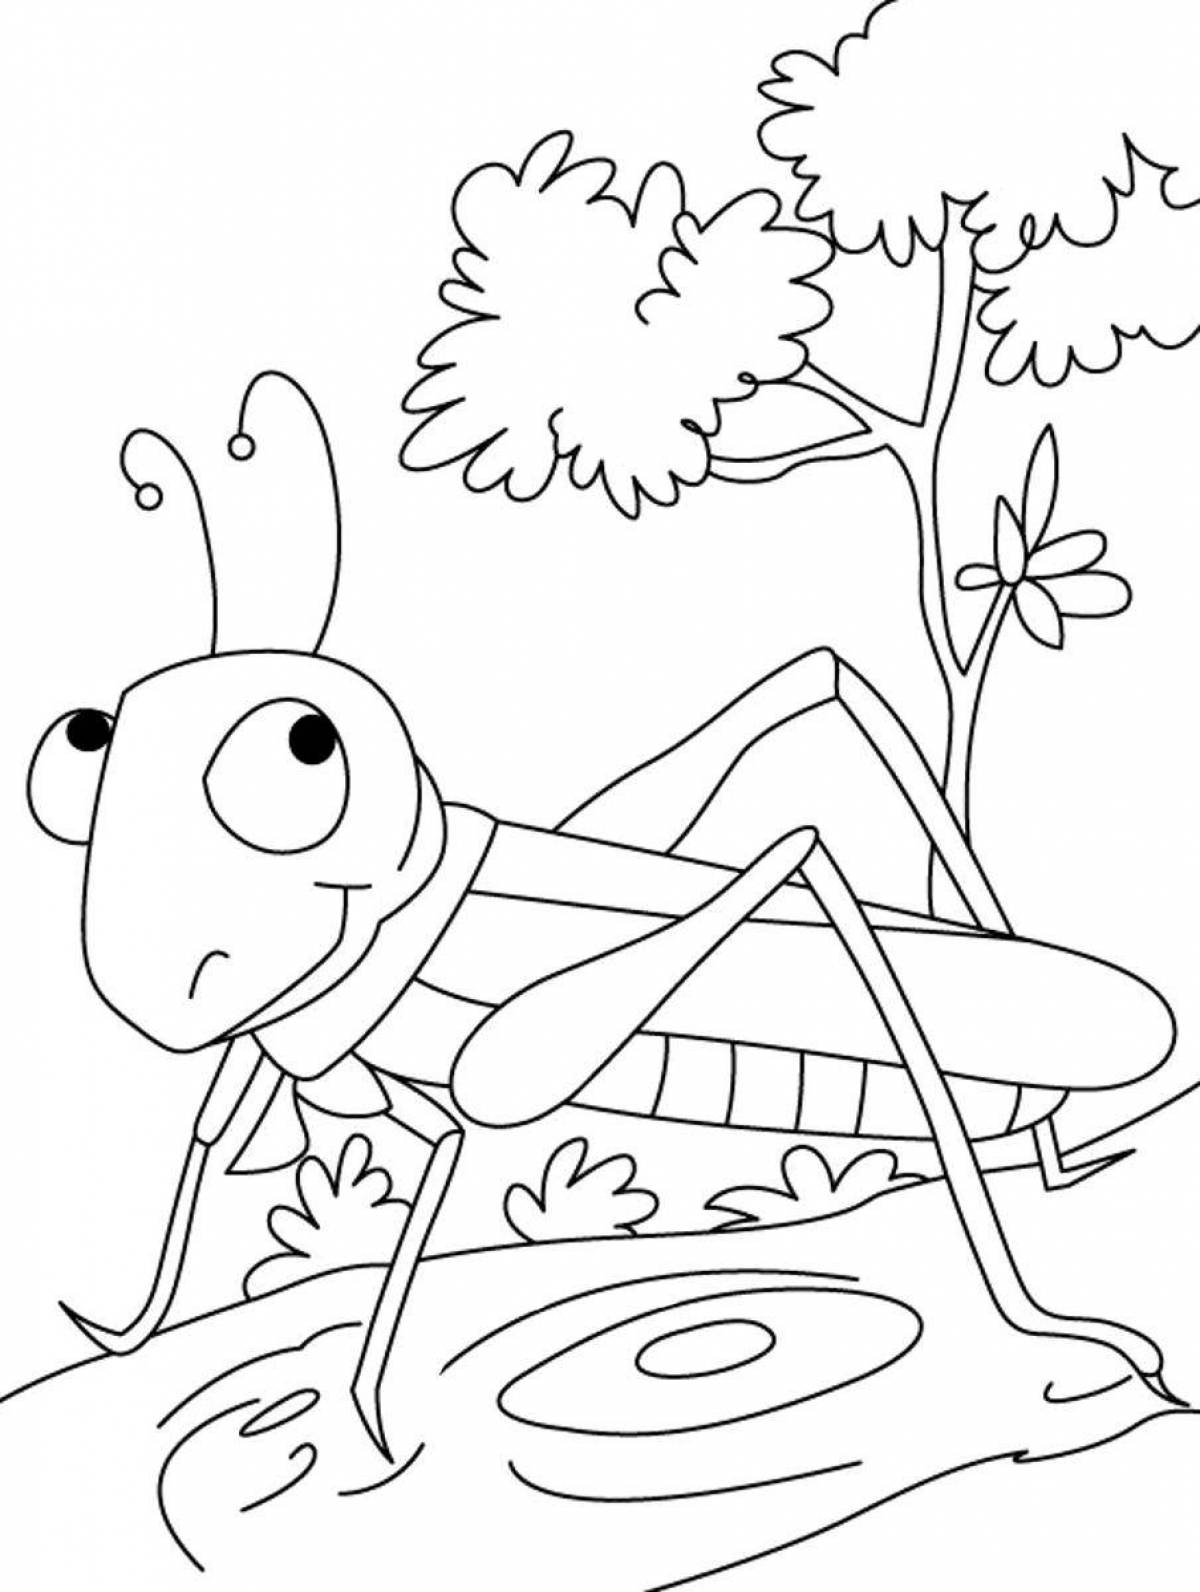 Grasshopper bright coloring book for kids